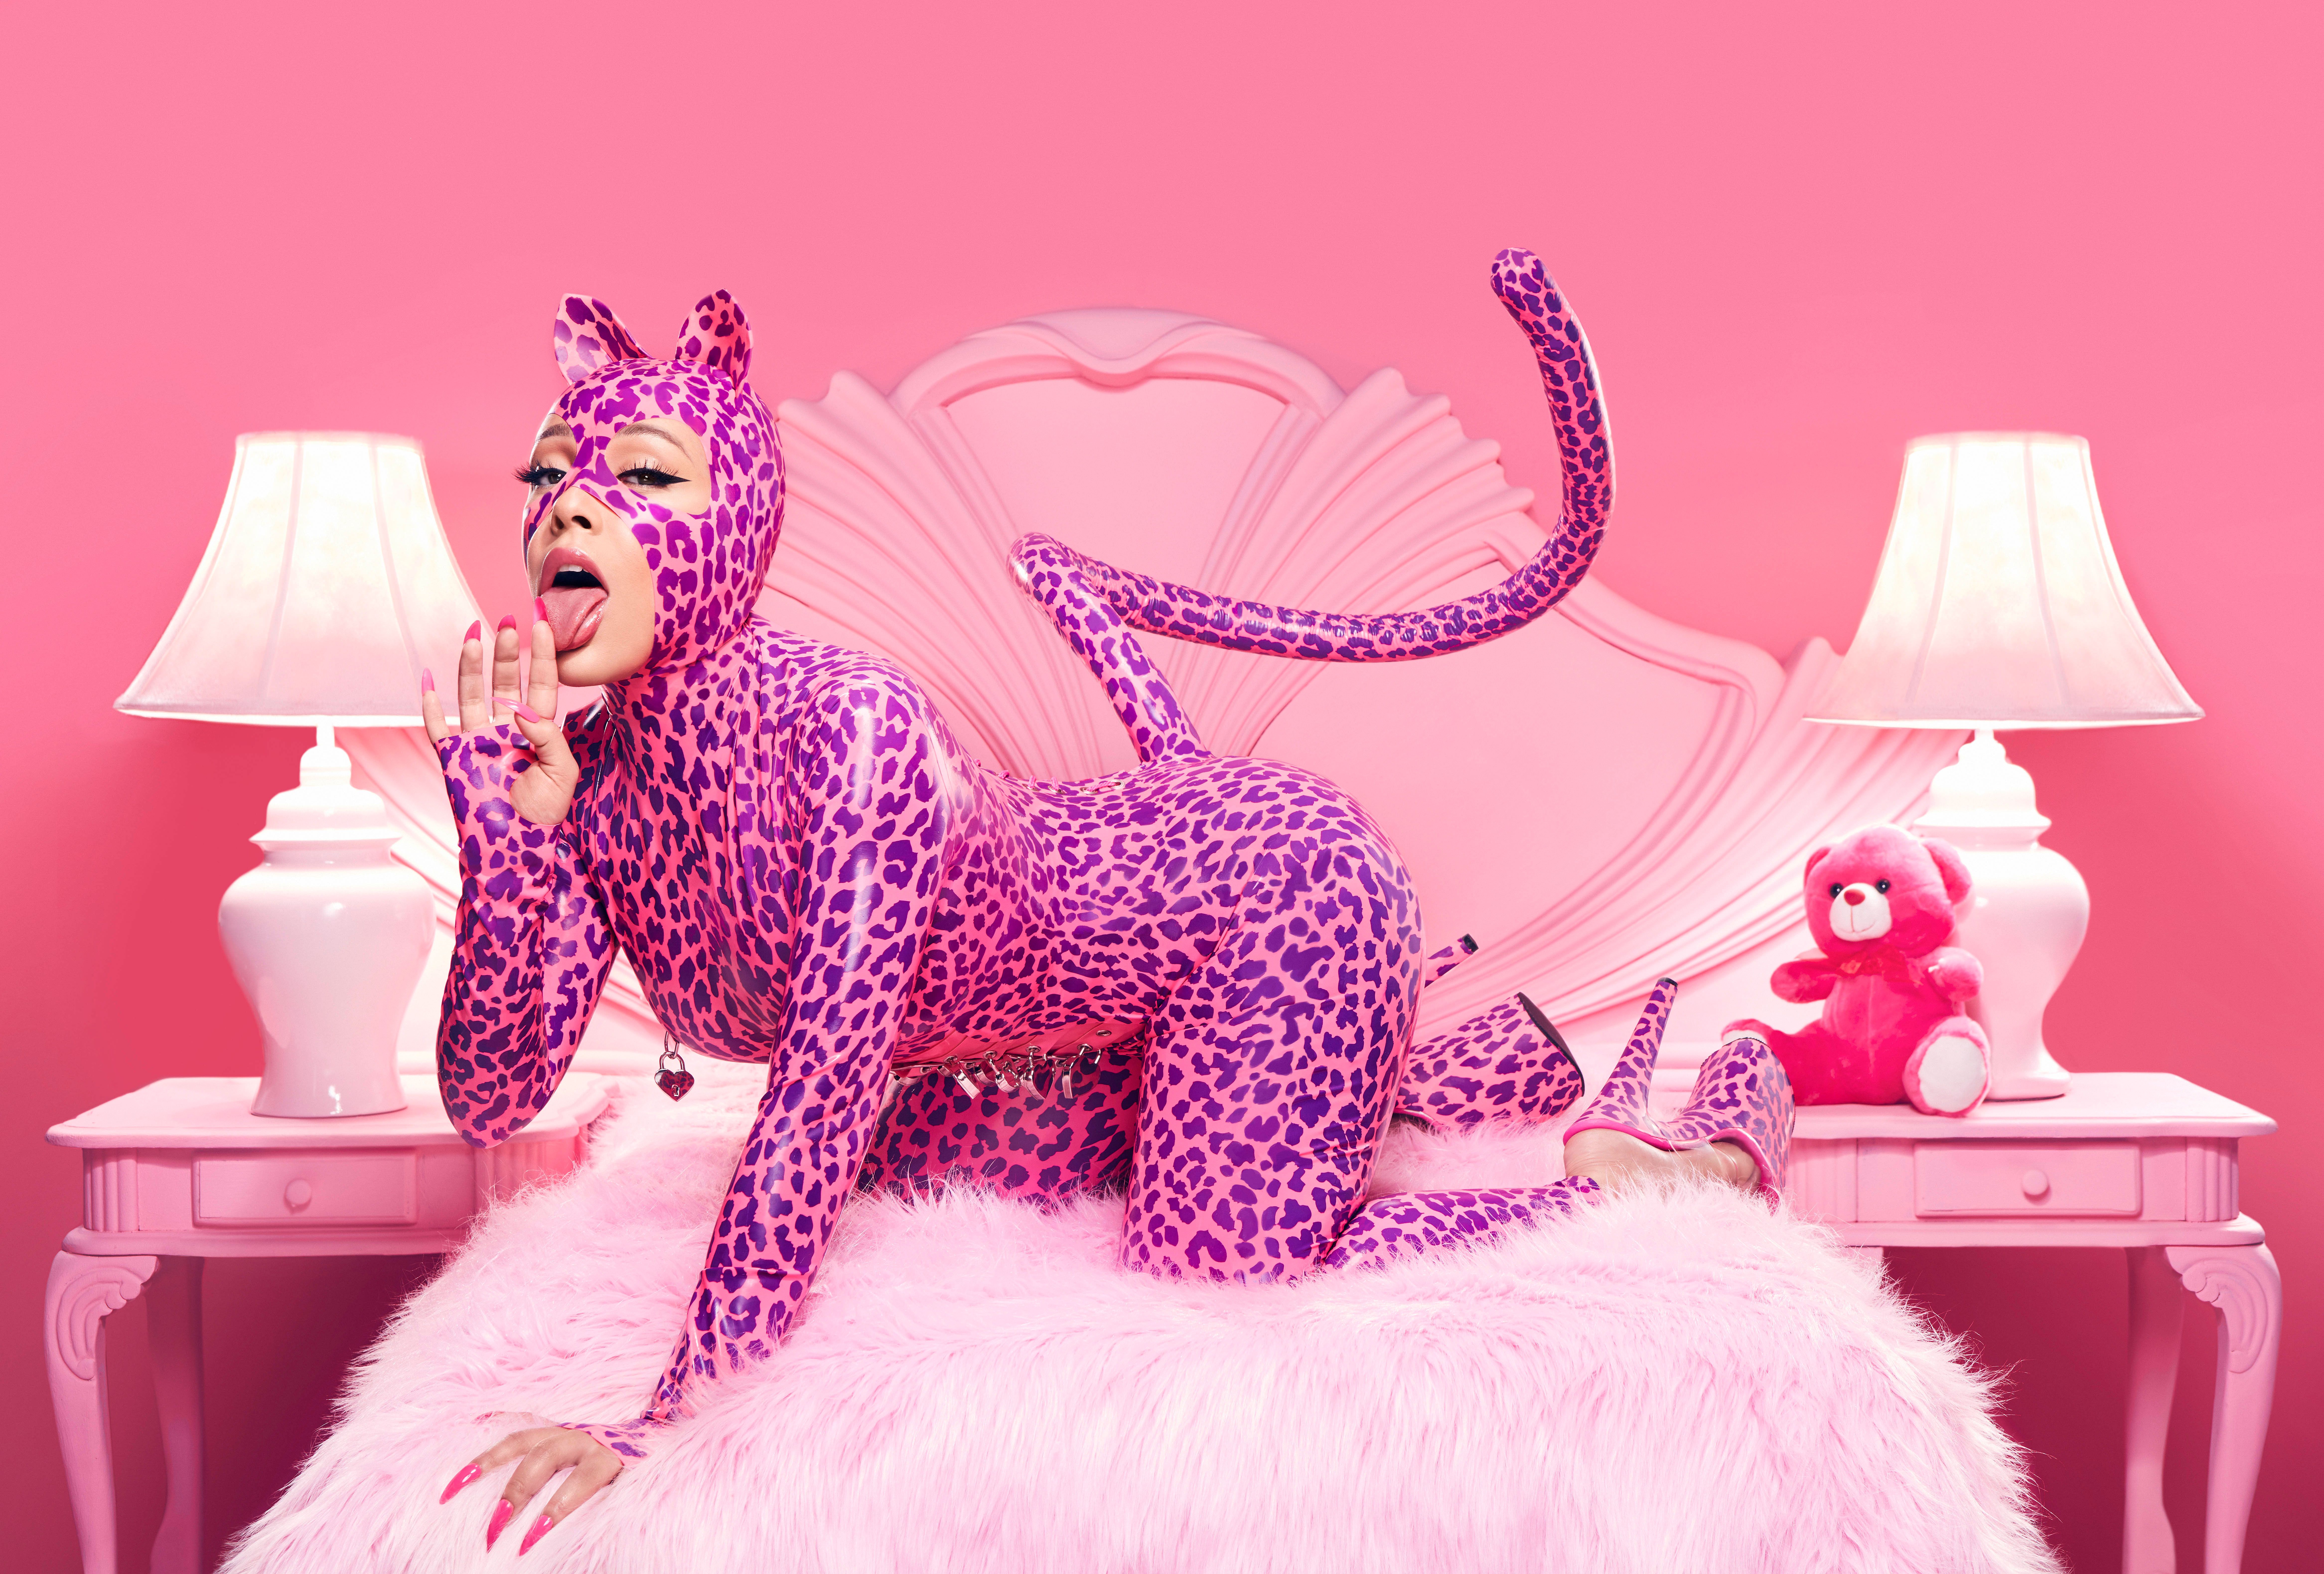 Doja Cat Hot Pink Album Interview - Doja Cat on Busta Rhymes and Smino